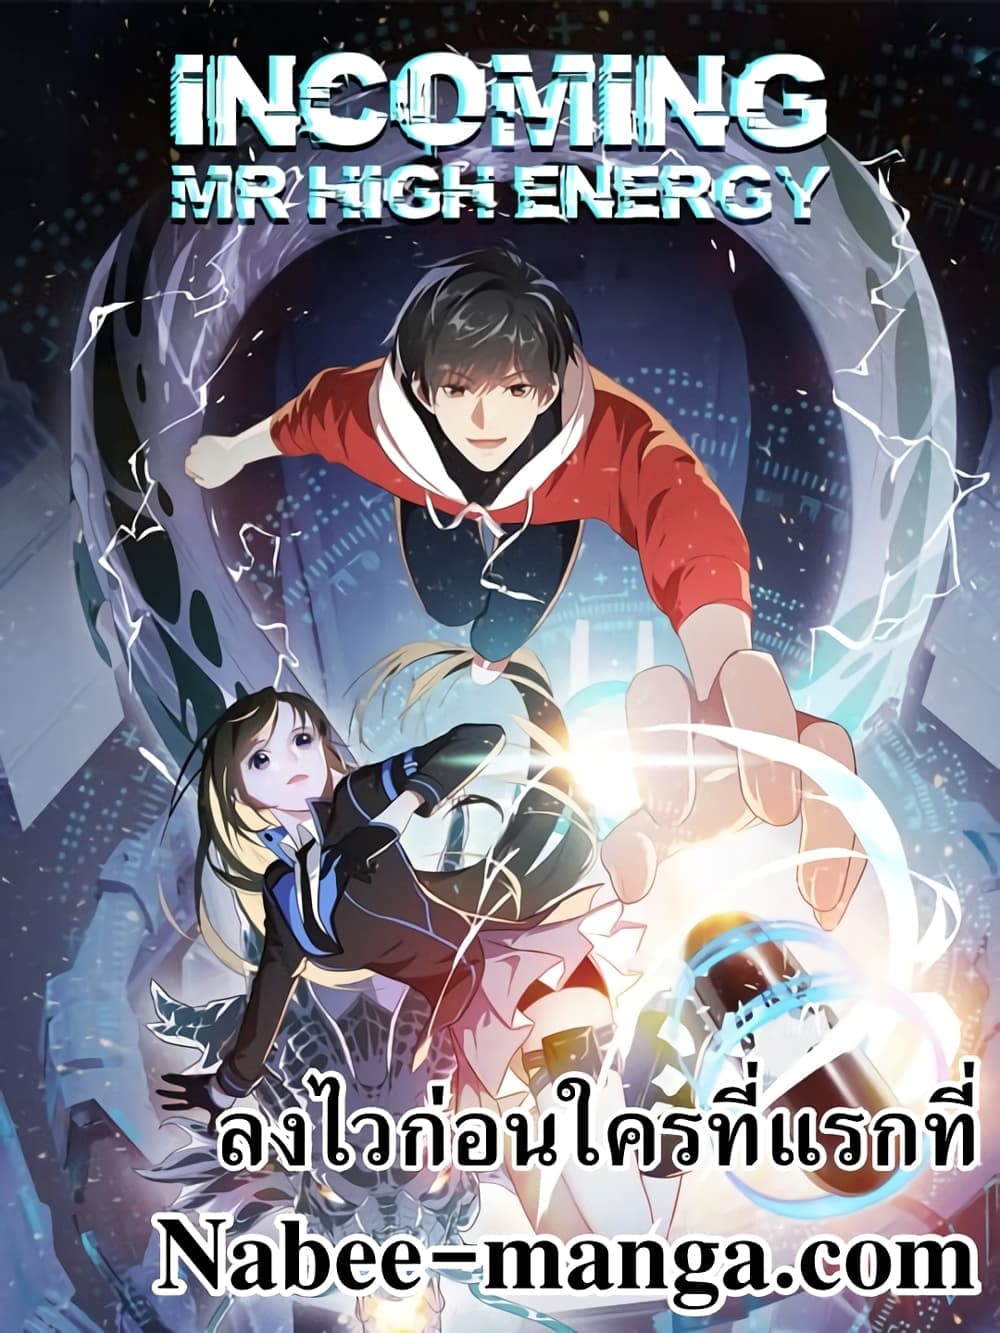 High Energy Strikes à¸à¸­à¸à¸à¸µà¹ 229 (1)